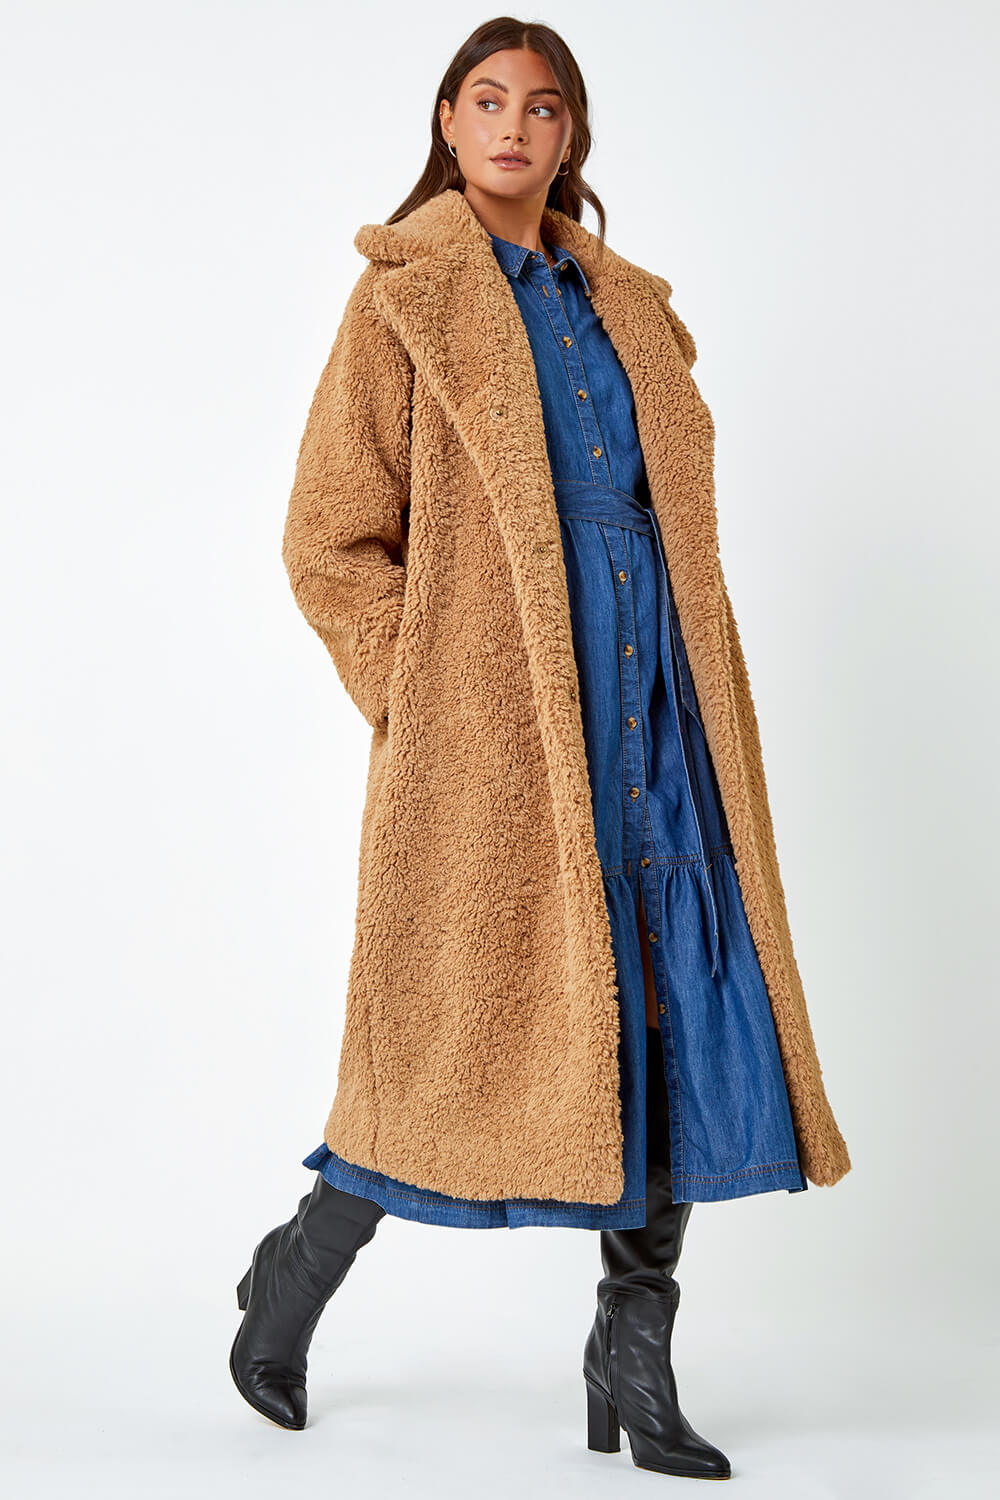 Longline Faux Fur Teddy Borg Coat